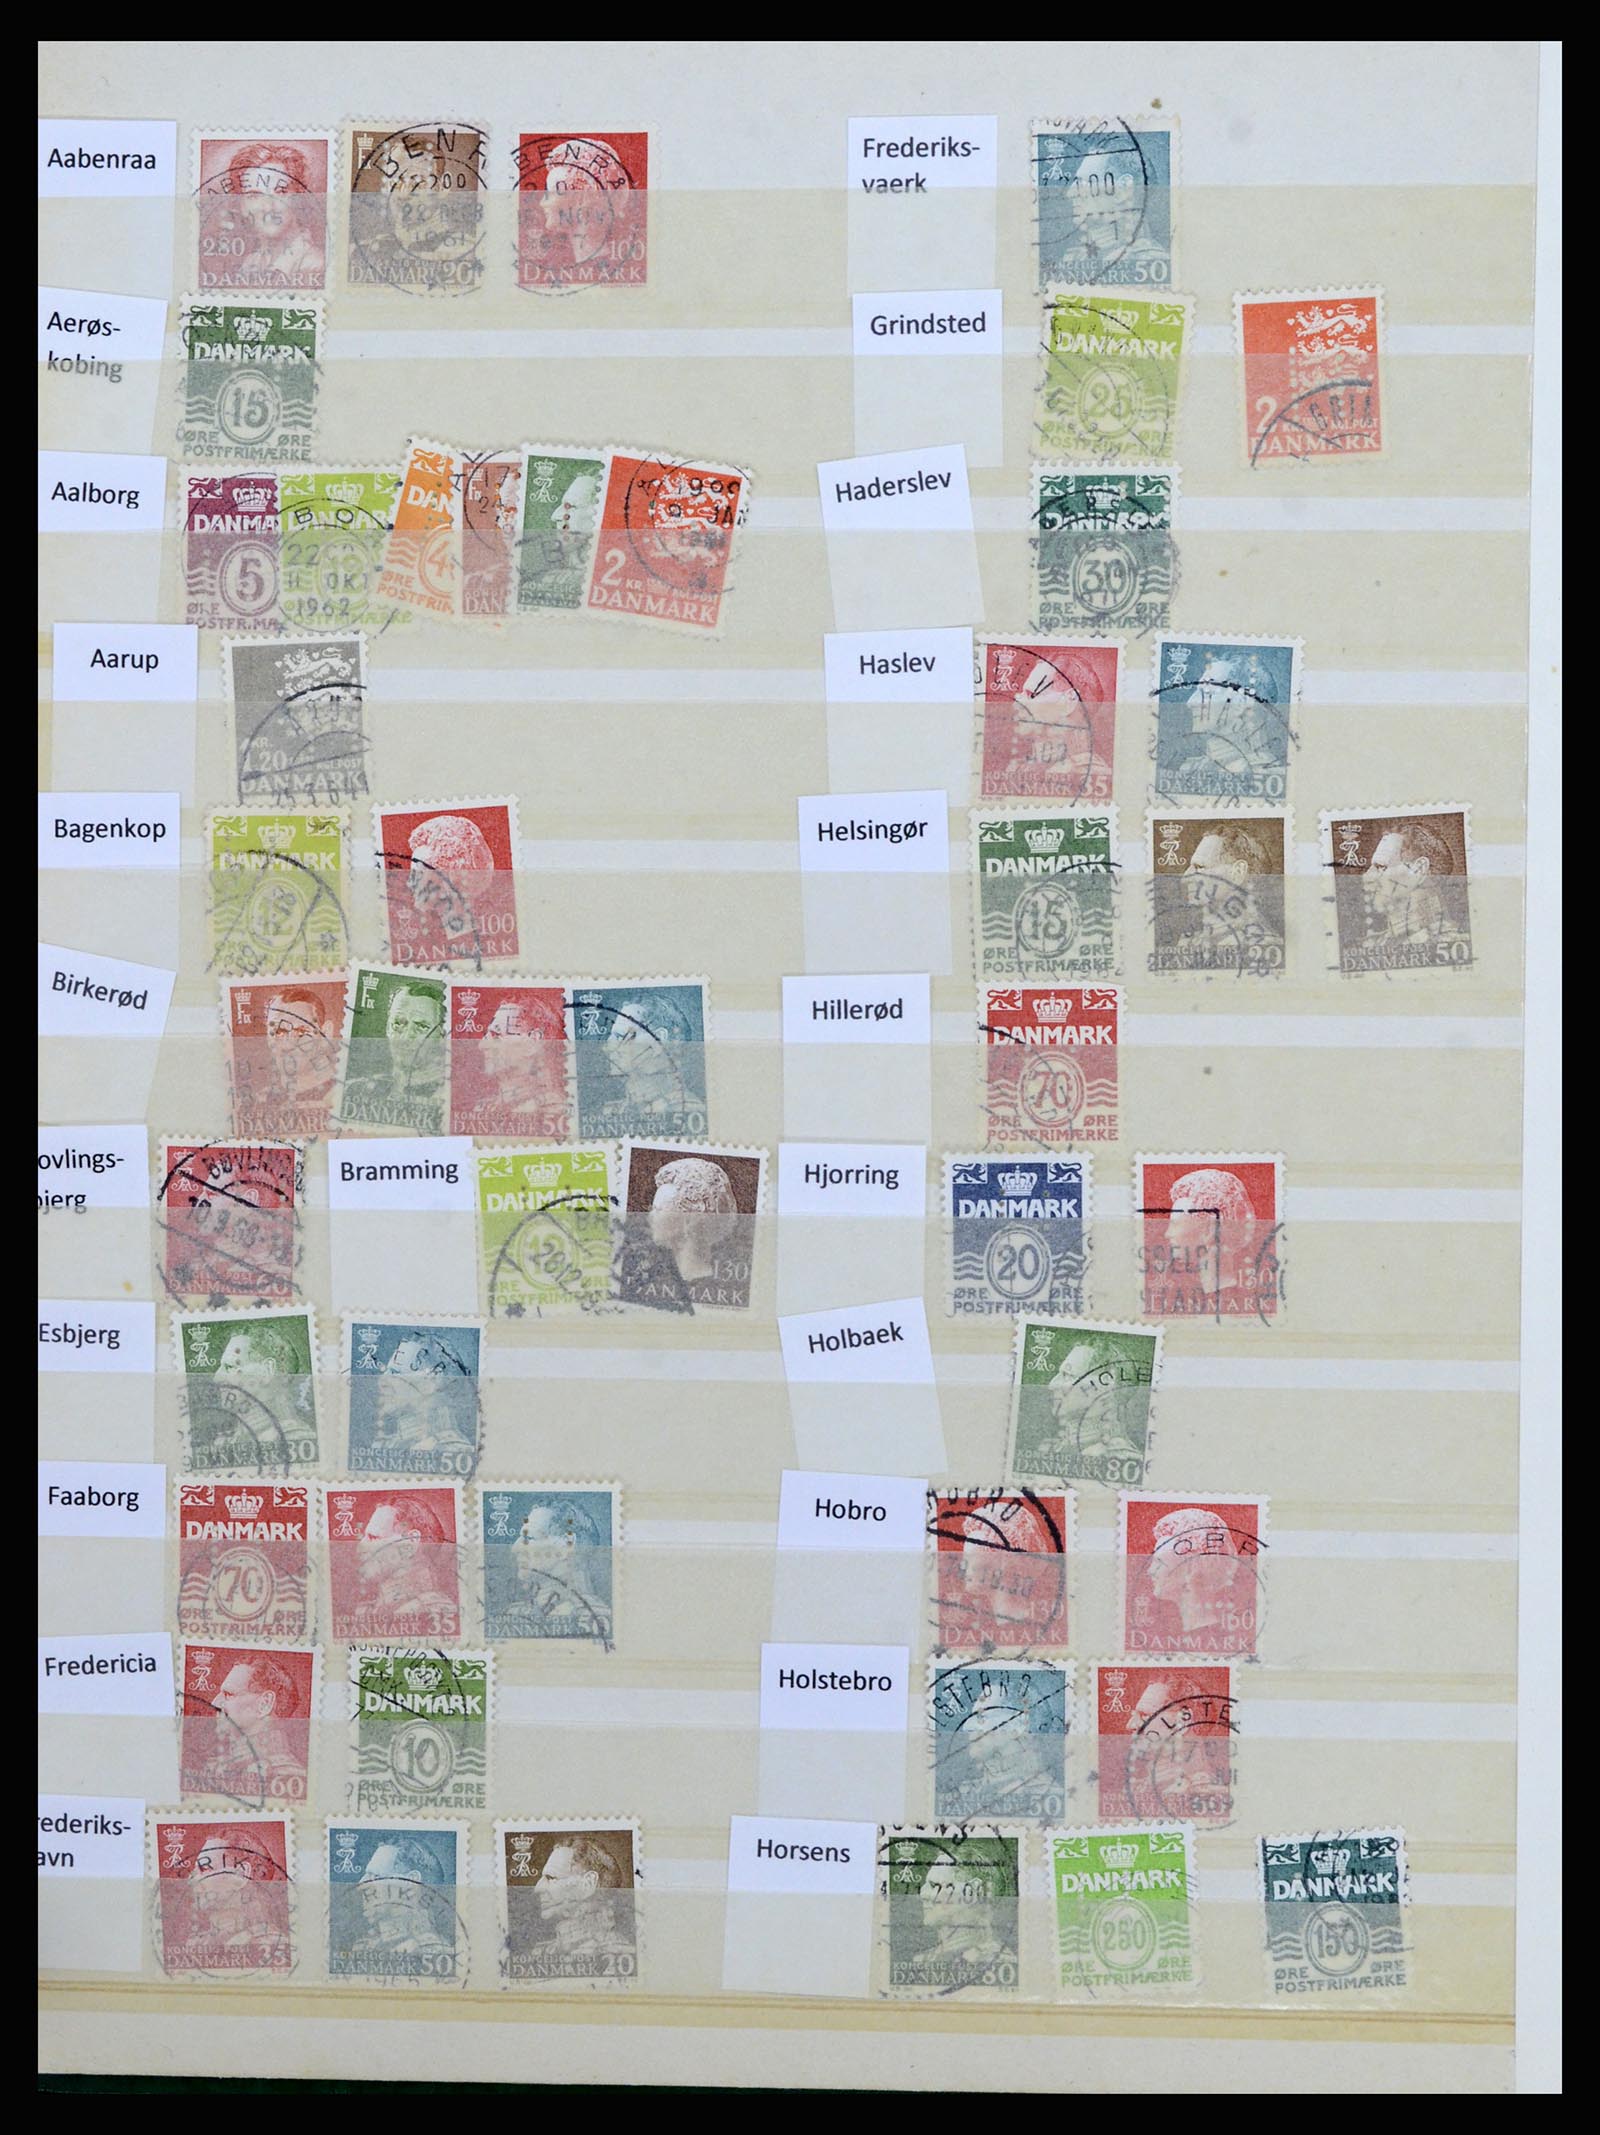 37056 039 - Stamp collection 37056 Denmark perfins.